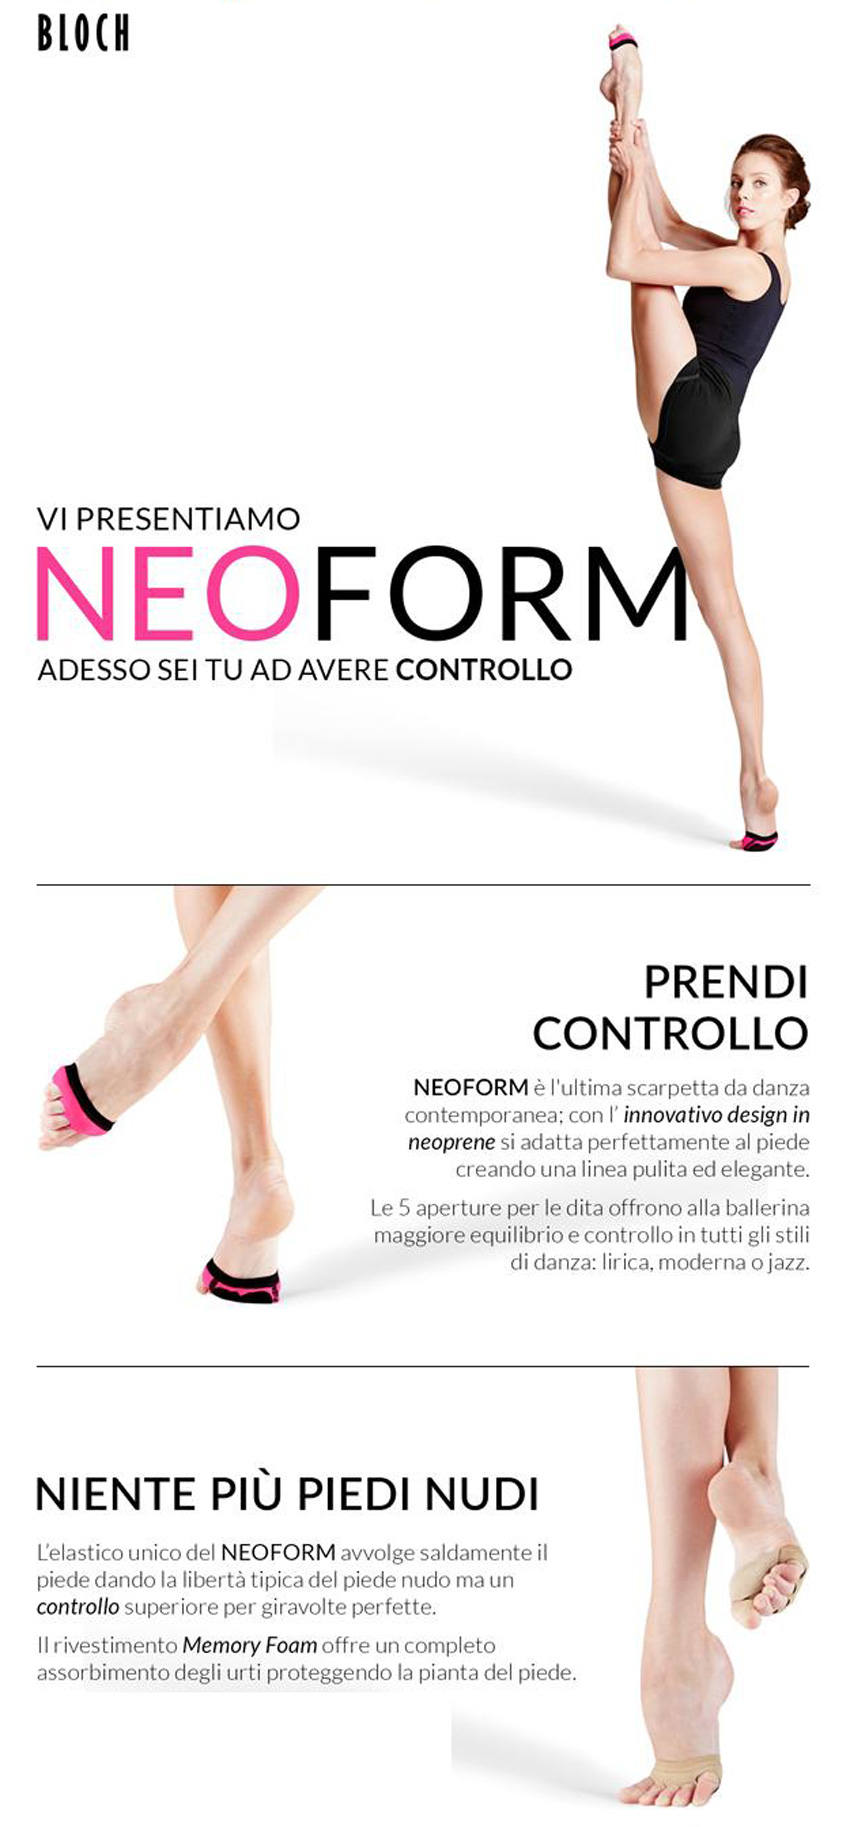 Bloch-NeoForm-info